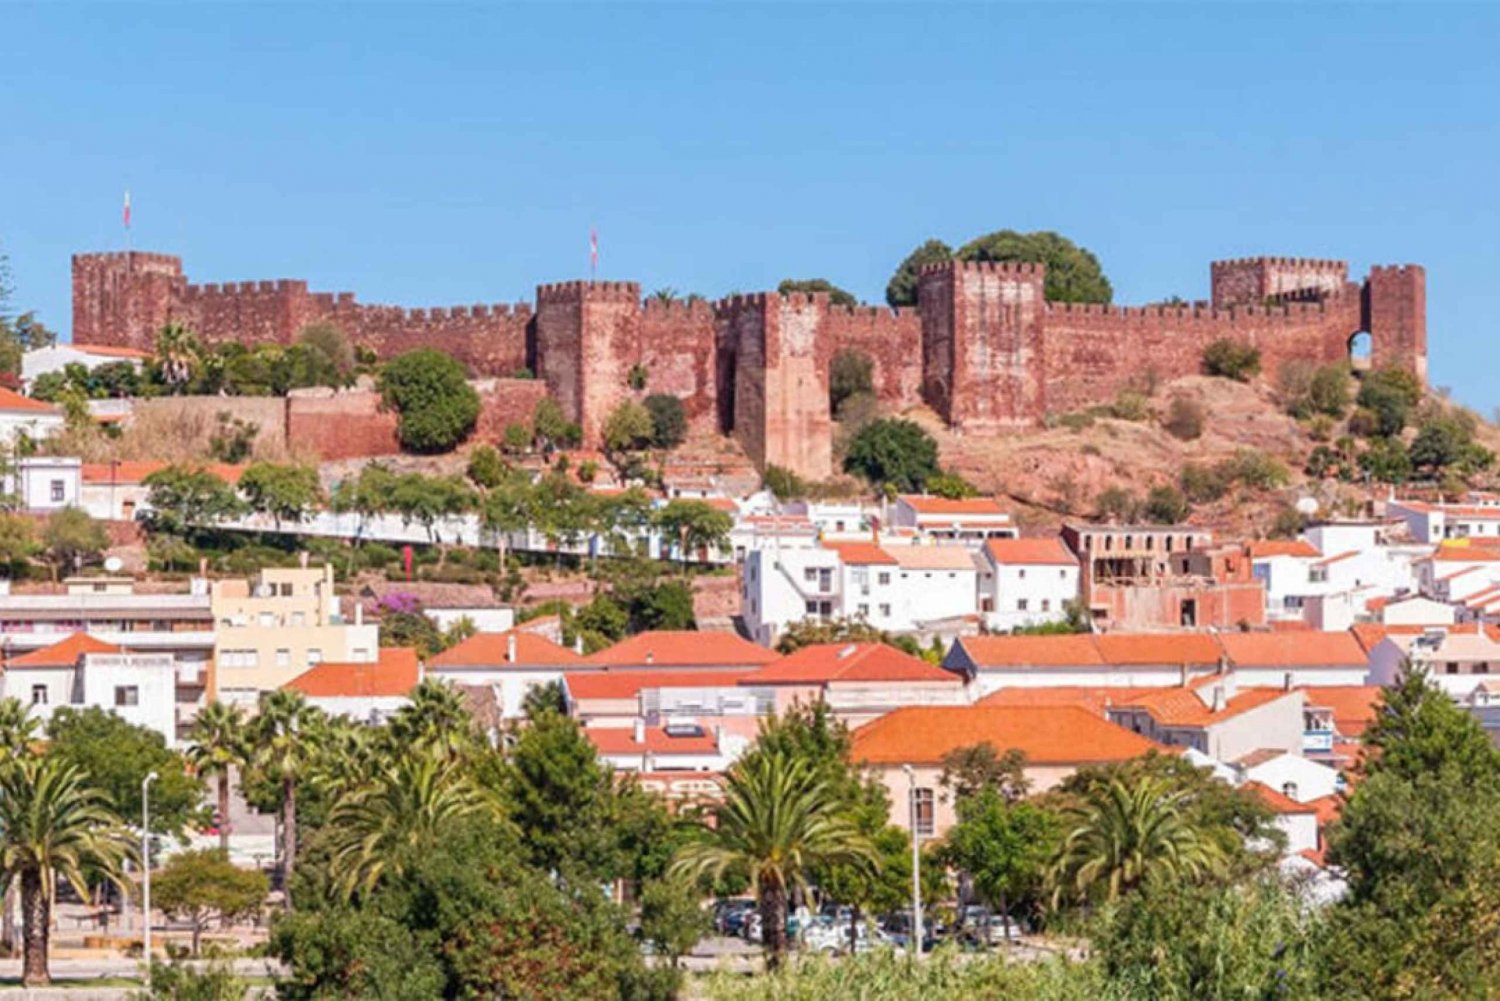 Benagil & Silves Castle (Senhora Rocha, Marinha, Carvoeiro)